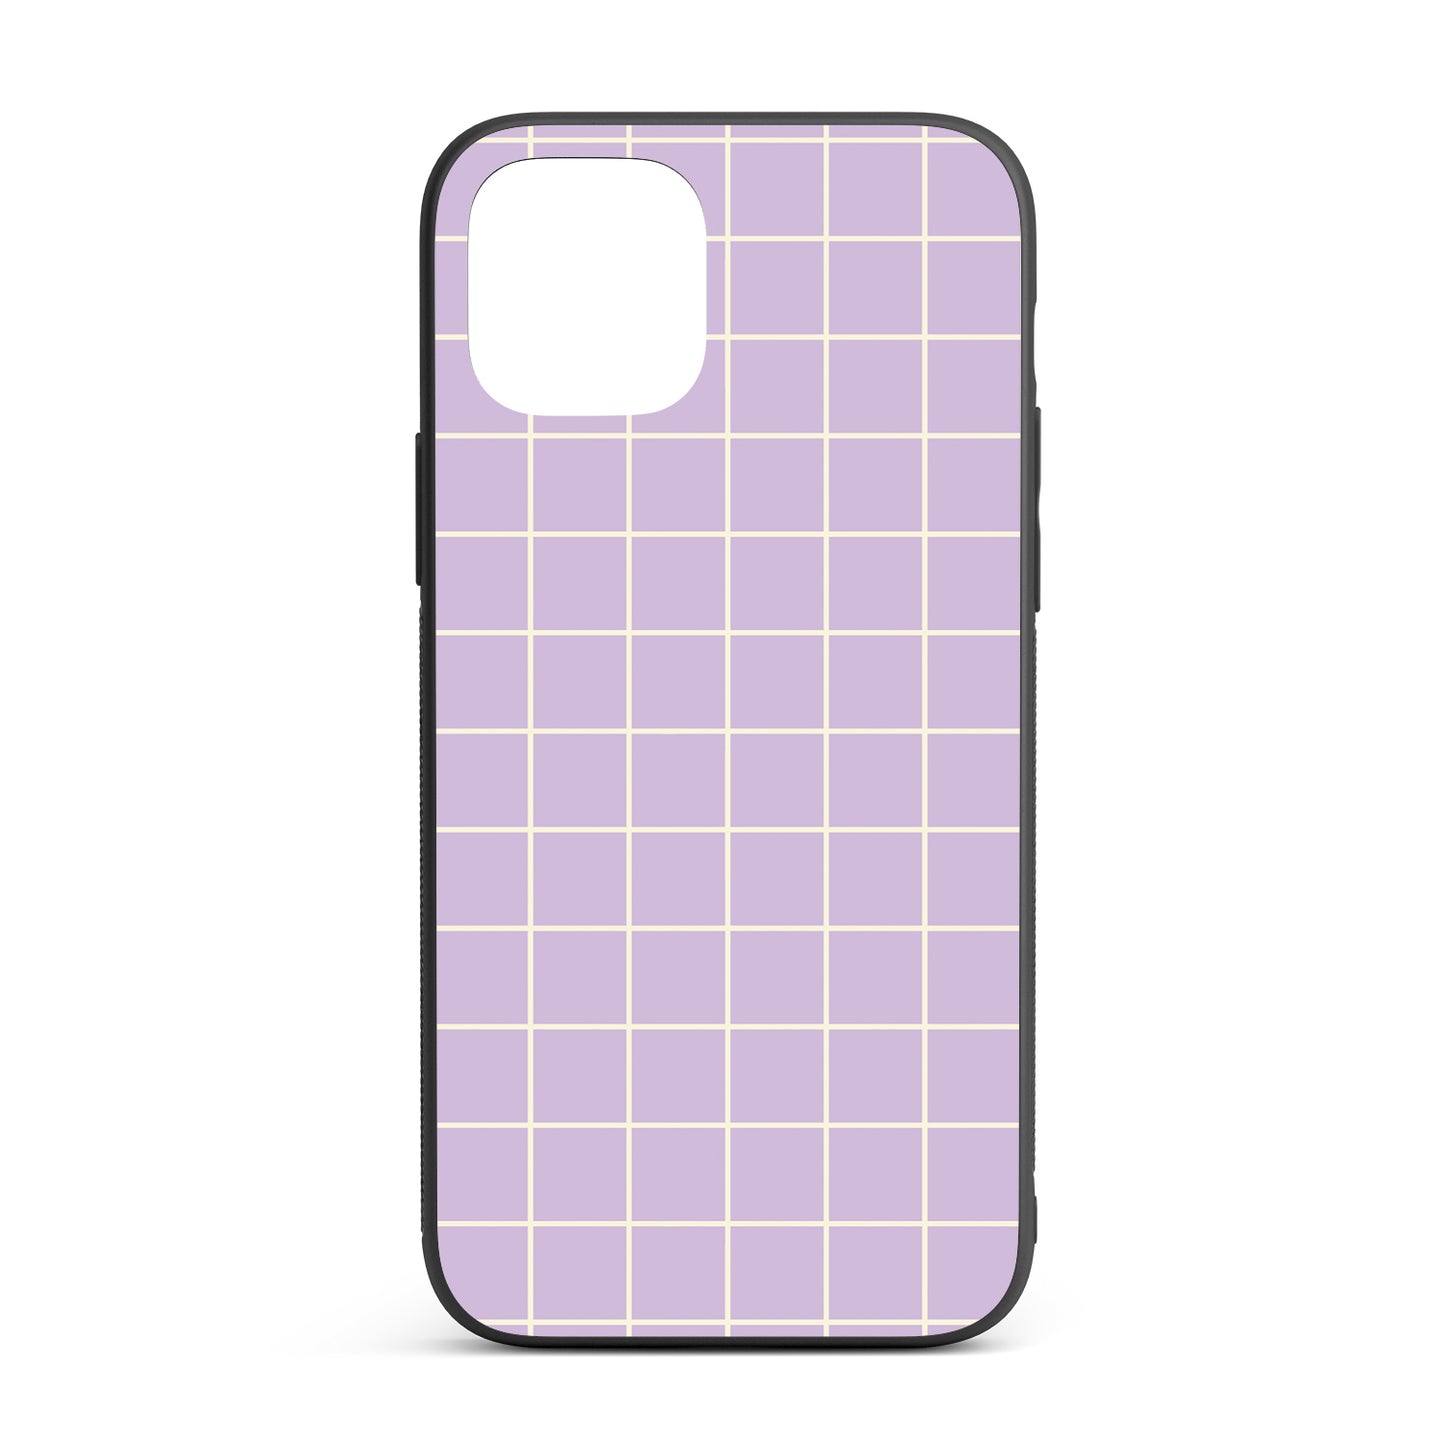 Purple gird iPhone glass case